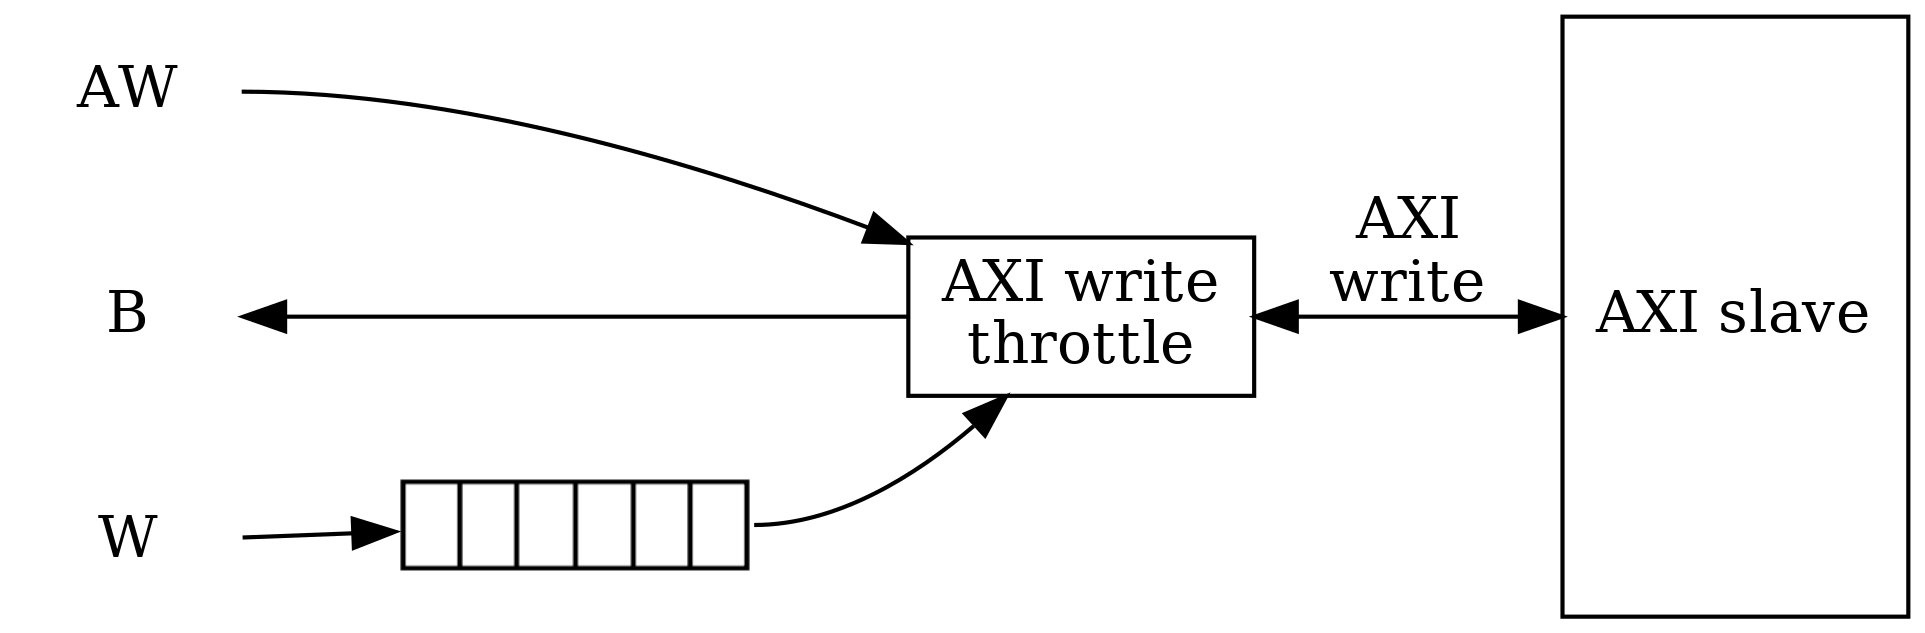 digraph my_graph {
graph [dpi=300];
rankdir="LR";

aw [shape=none label="AW"];
w [shape=none label="W"];
b [shape=none label="B"];

{
  rank=same;
  aw;
  w;
  b;
}

w_fifo [label="" shape=none image="fifo.png"];
w -> w_fifo;

axi_write_throttle [shape=box label="AXI write\nthrottle"];
aw:e -> axi_write_throttle;
w_fifo:e -> axi_write_throttle;
b -> axi_write_throttle [dir="back"];

axi_slave [shape=box label="AXI slave" height=2];

axi_write_throttle -> axi_slave [dir="both" label="AXI\nwrite"];
}